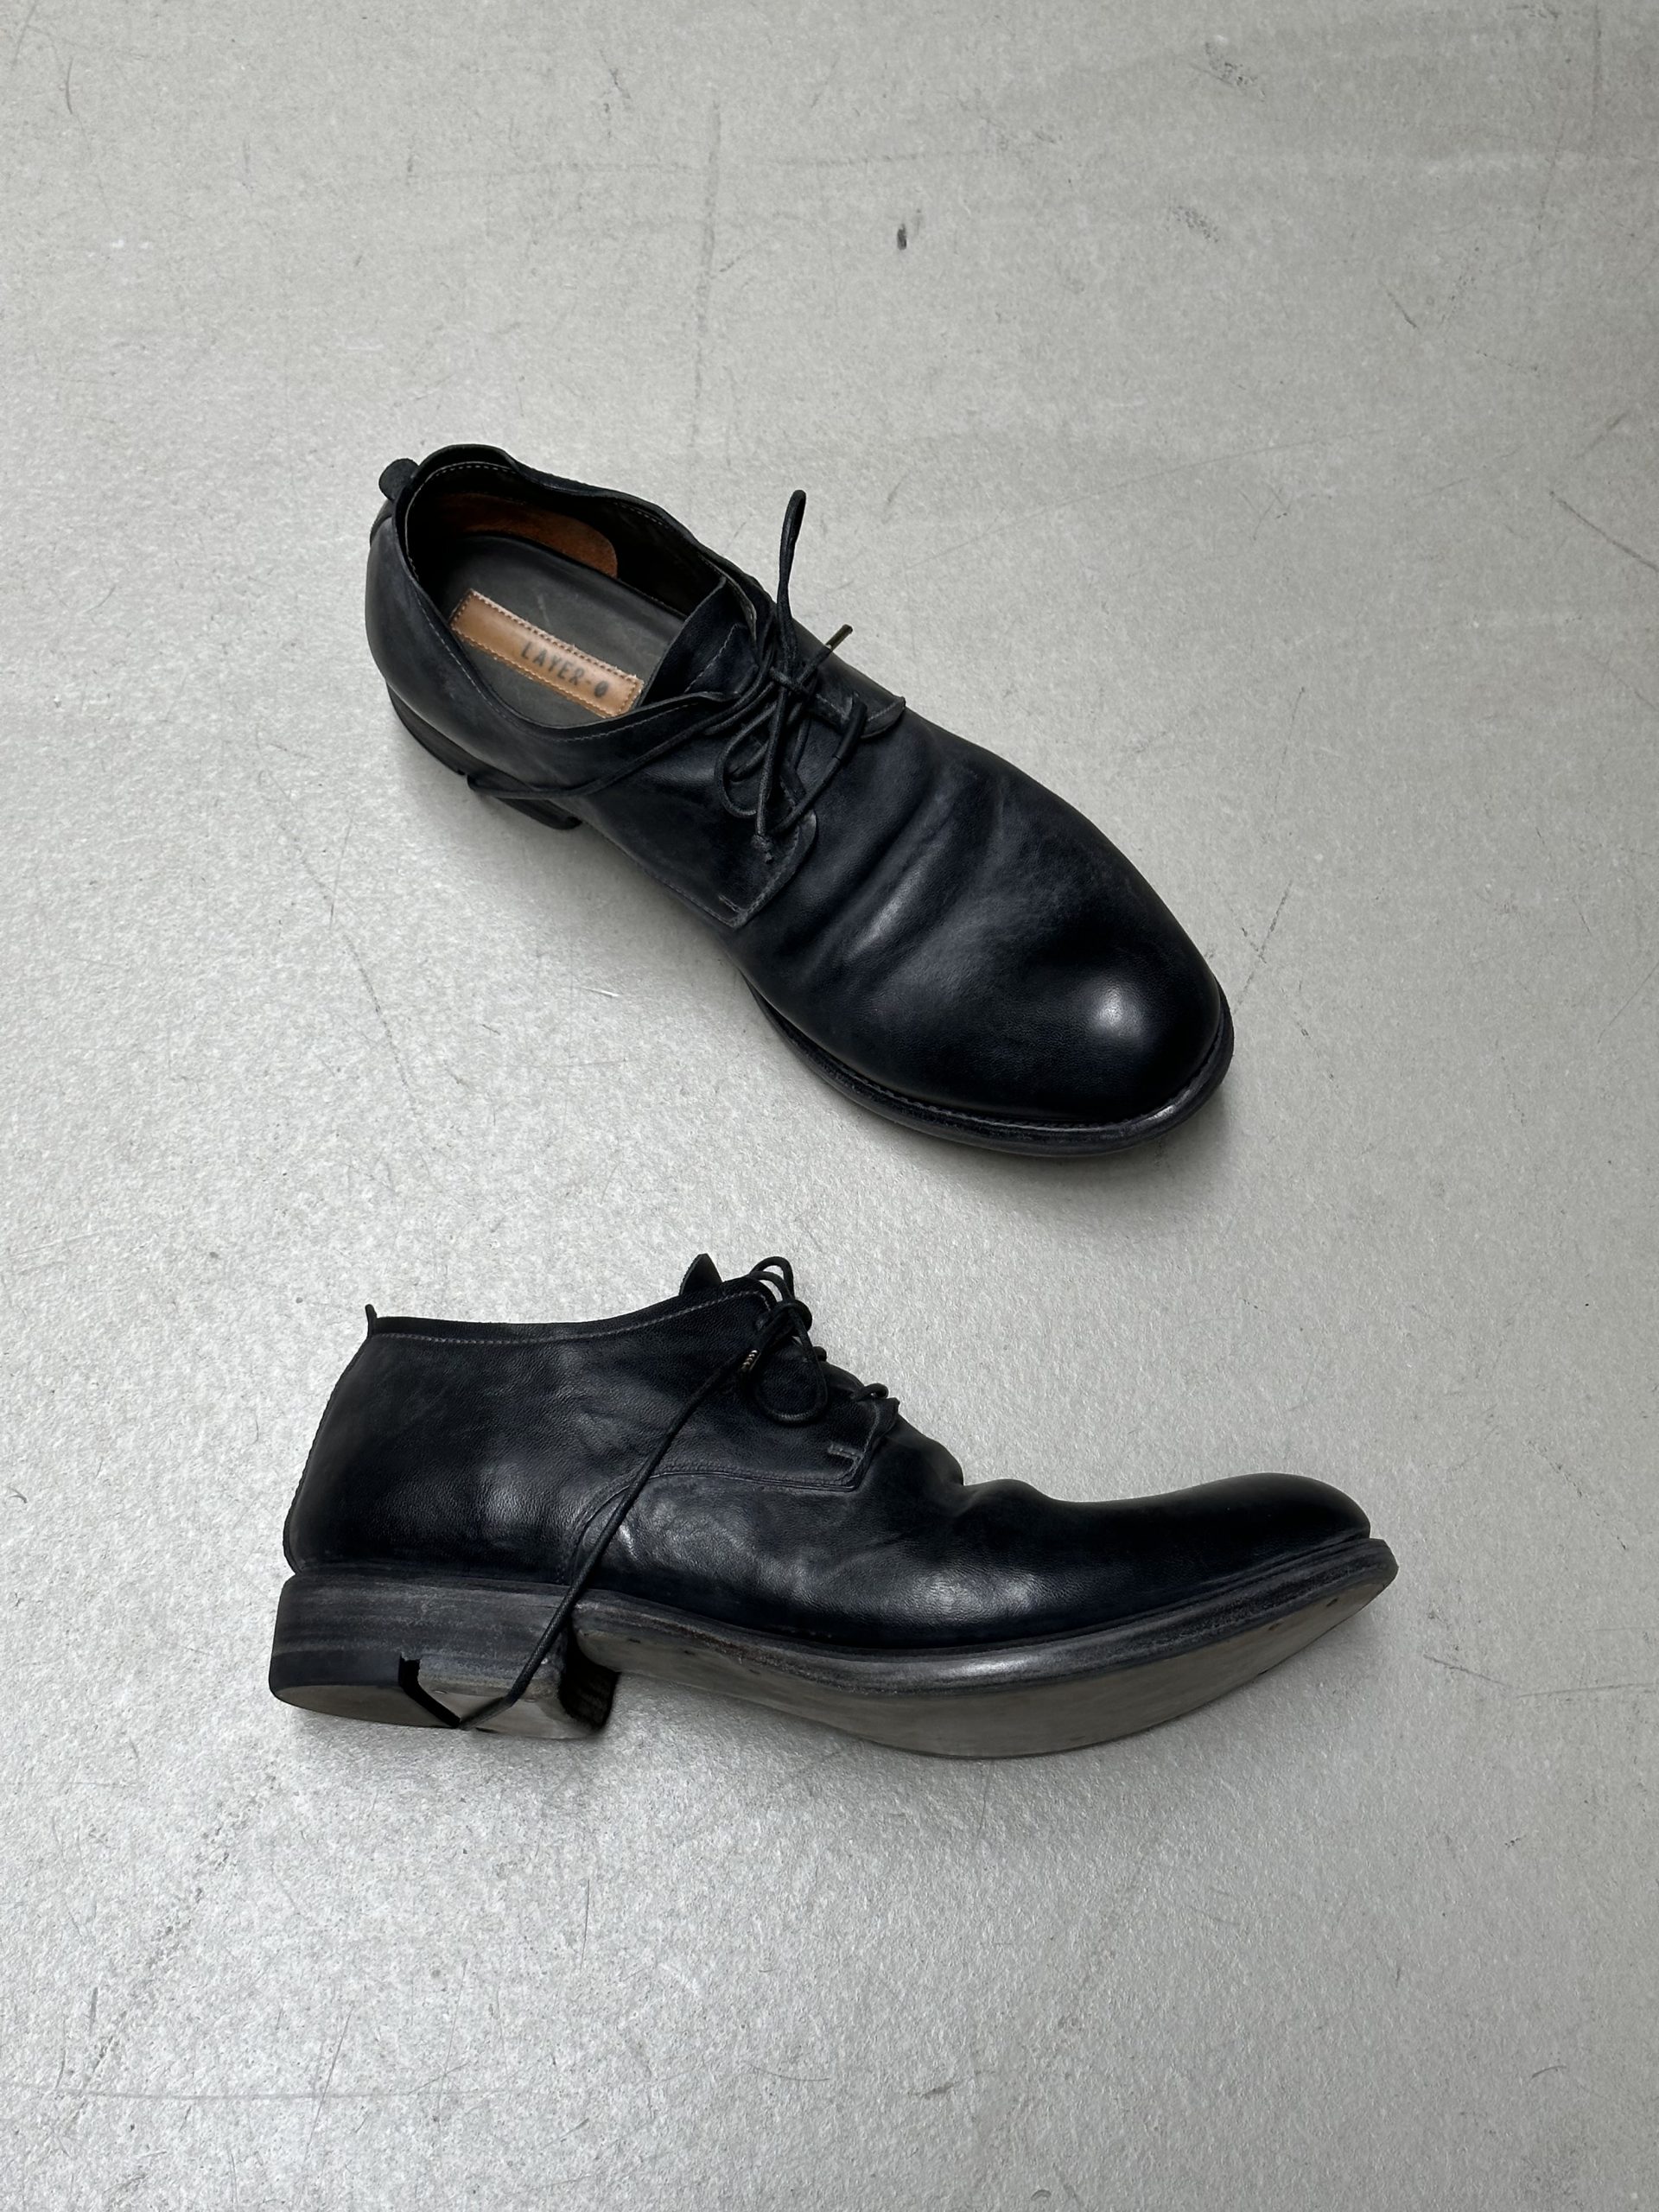 hide-m  LAYER-0 Men Classic Derby Shoe 1.5 H7 GY, black horse leather